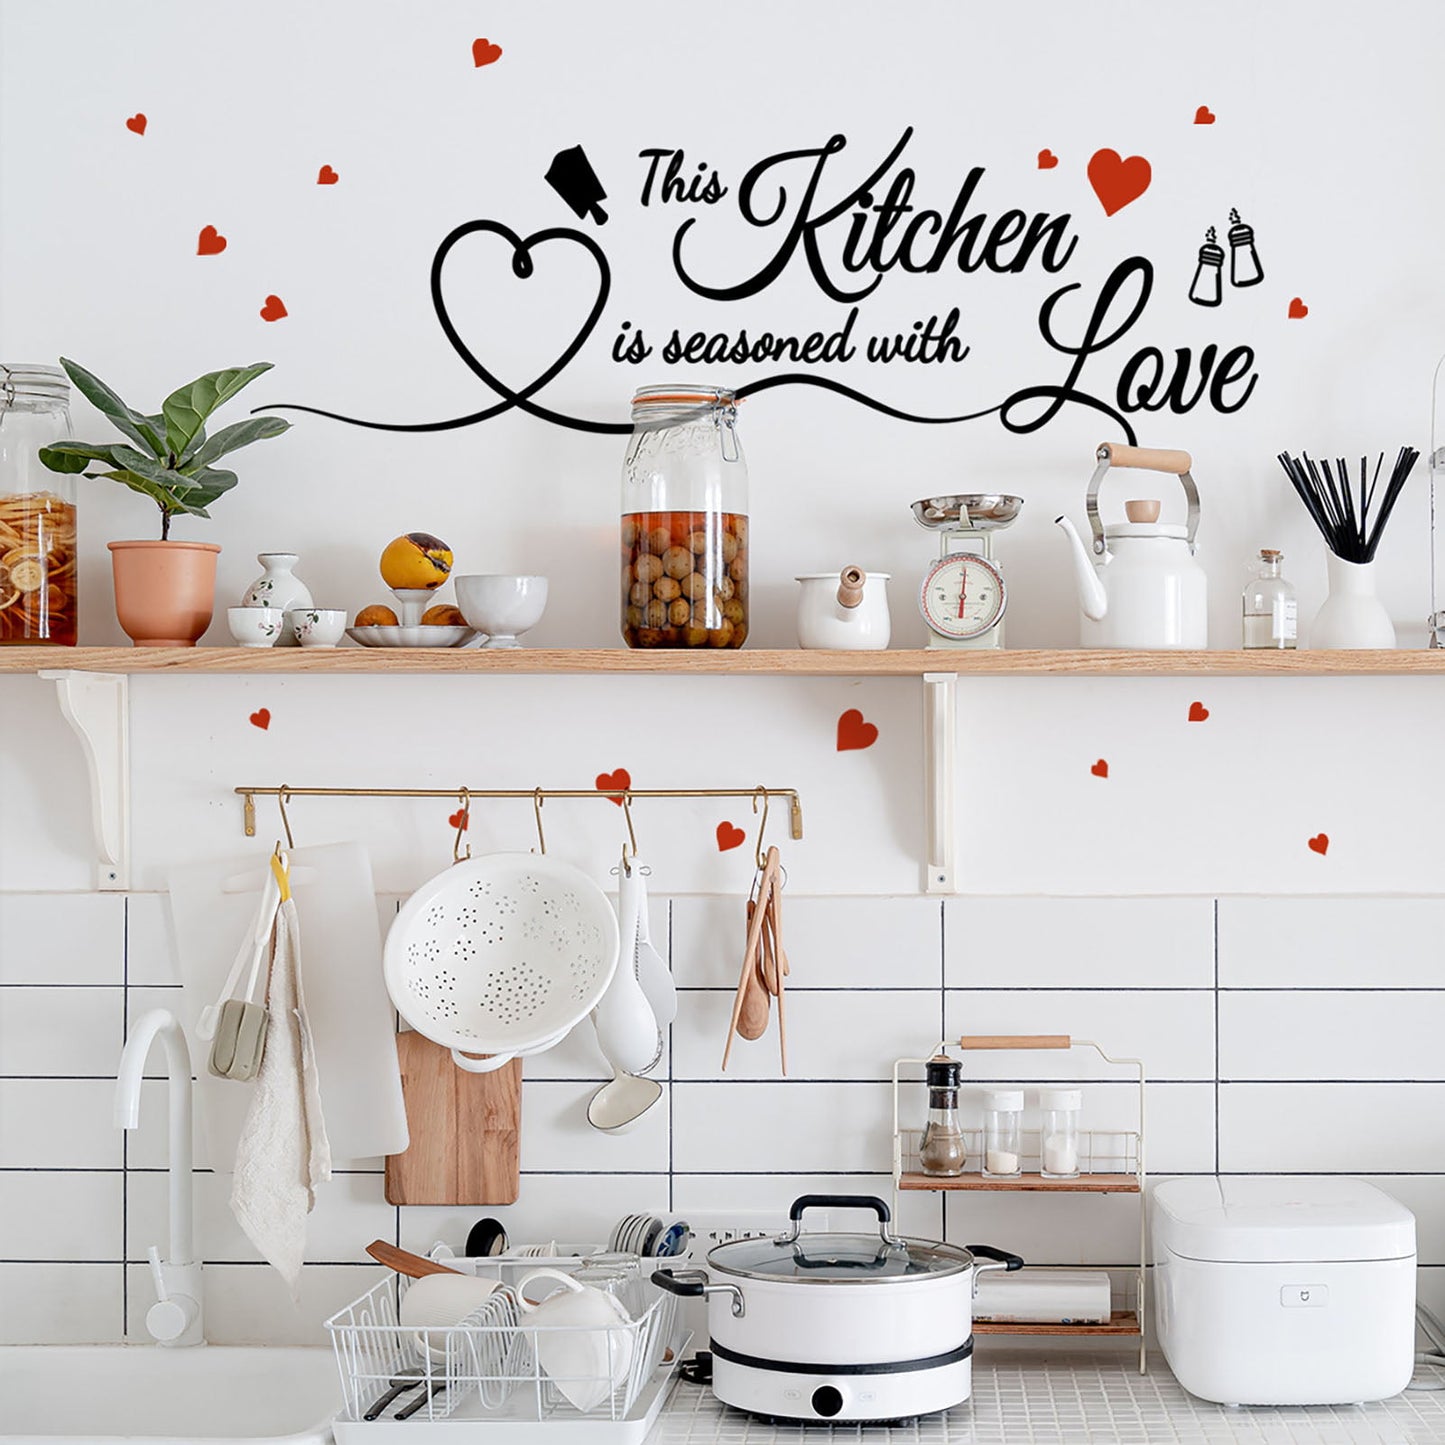 Culinary Inspiration" PVC Kitchen Wall Decal